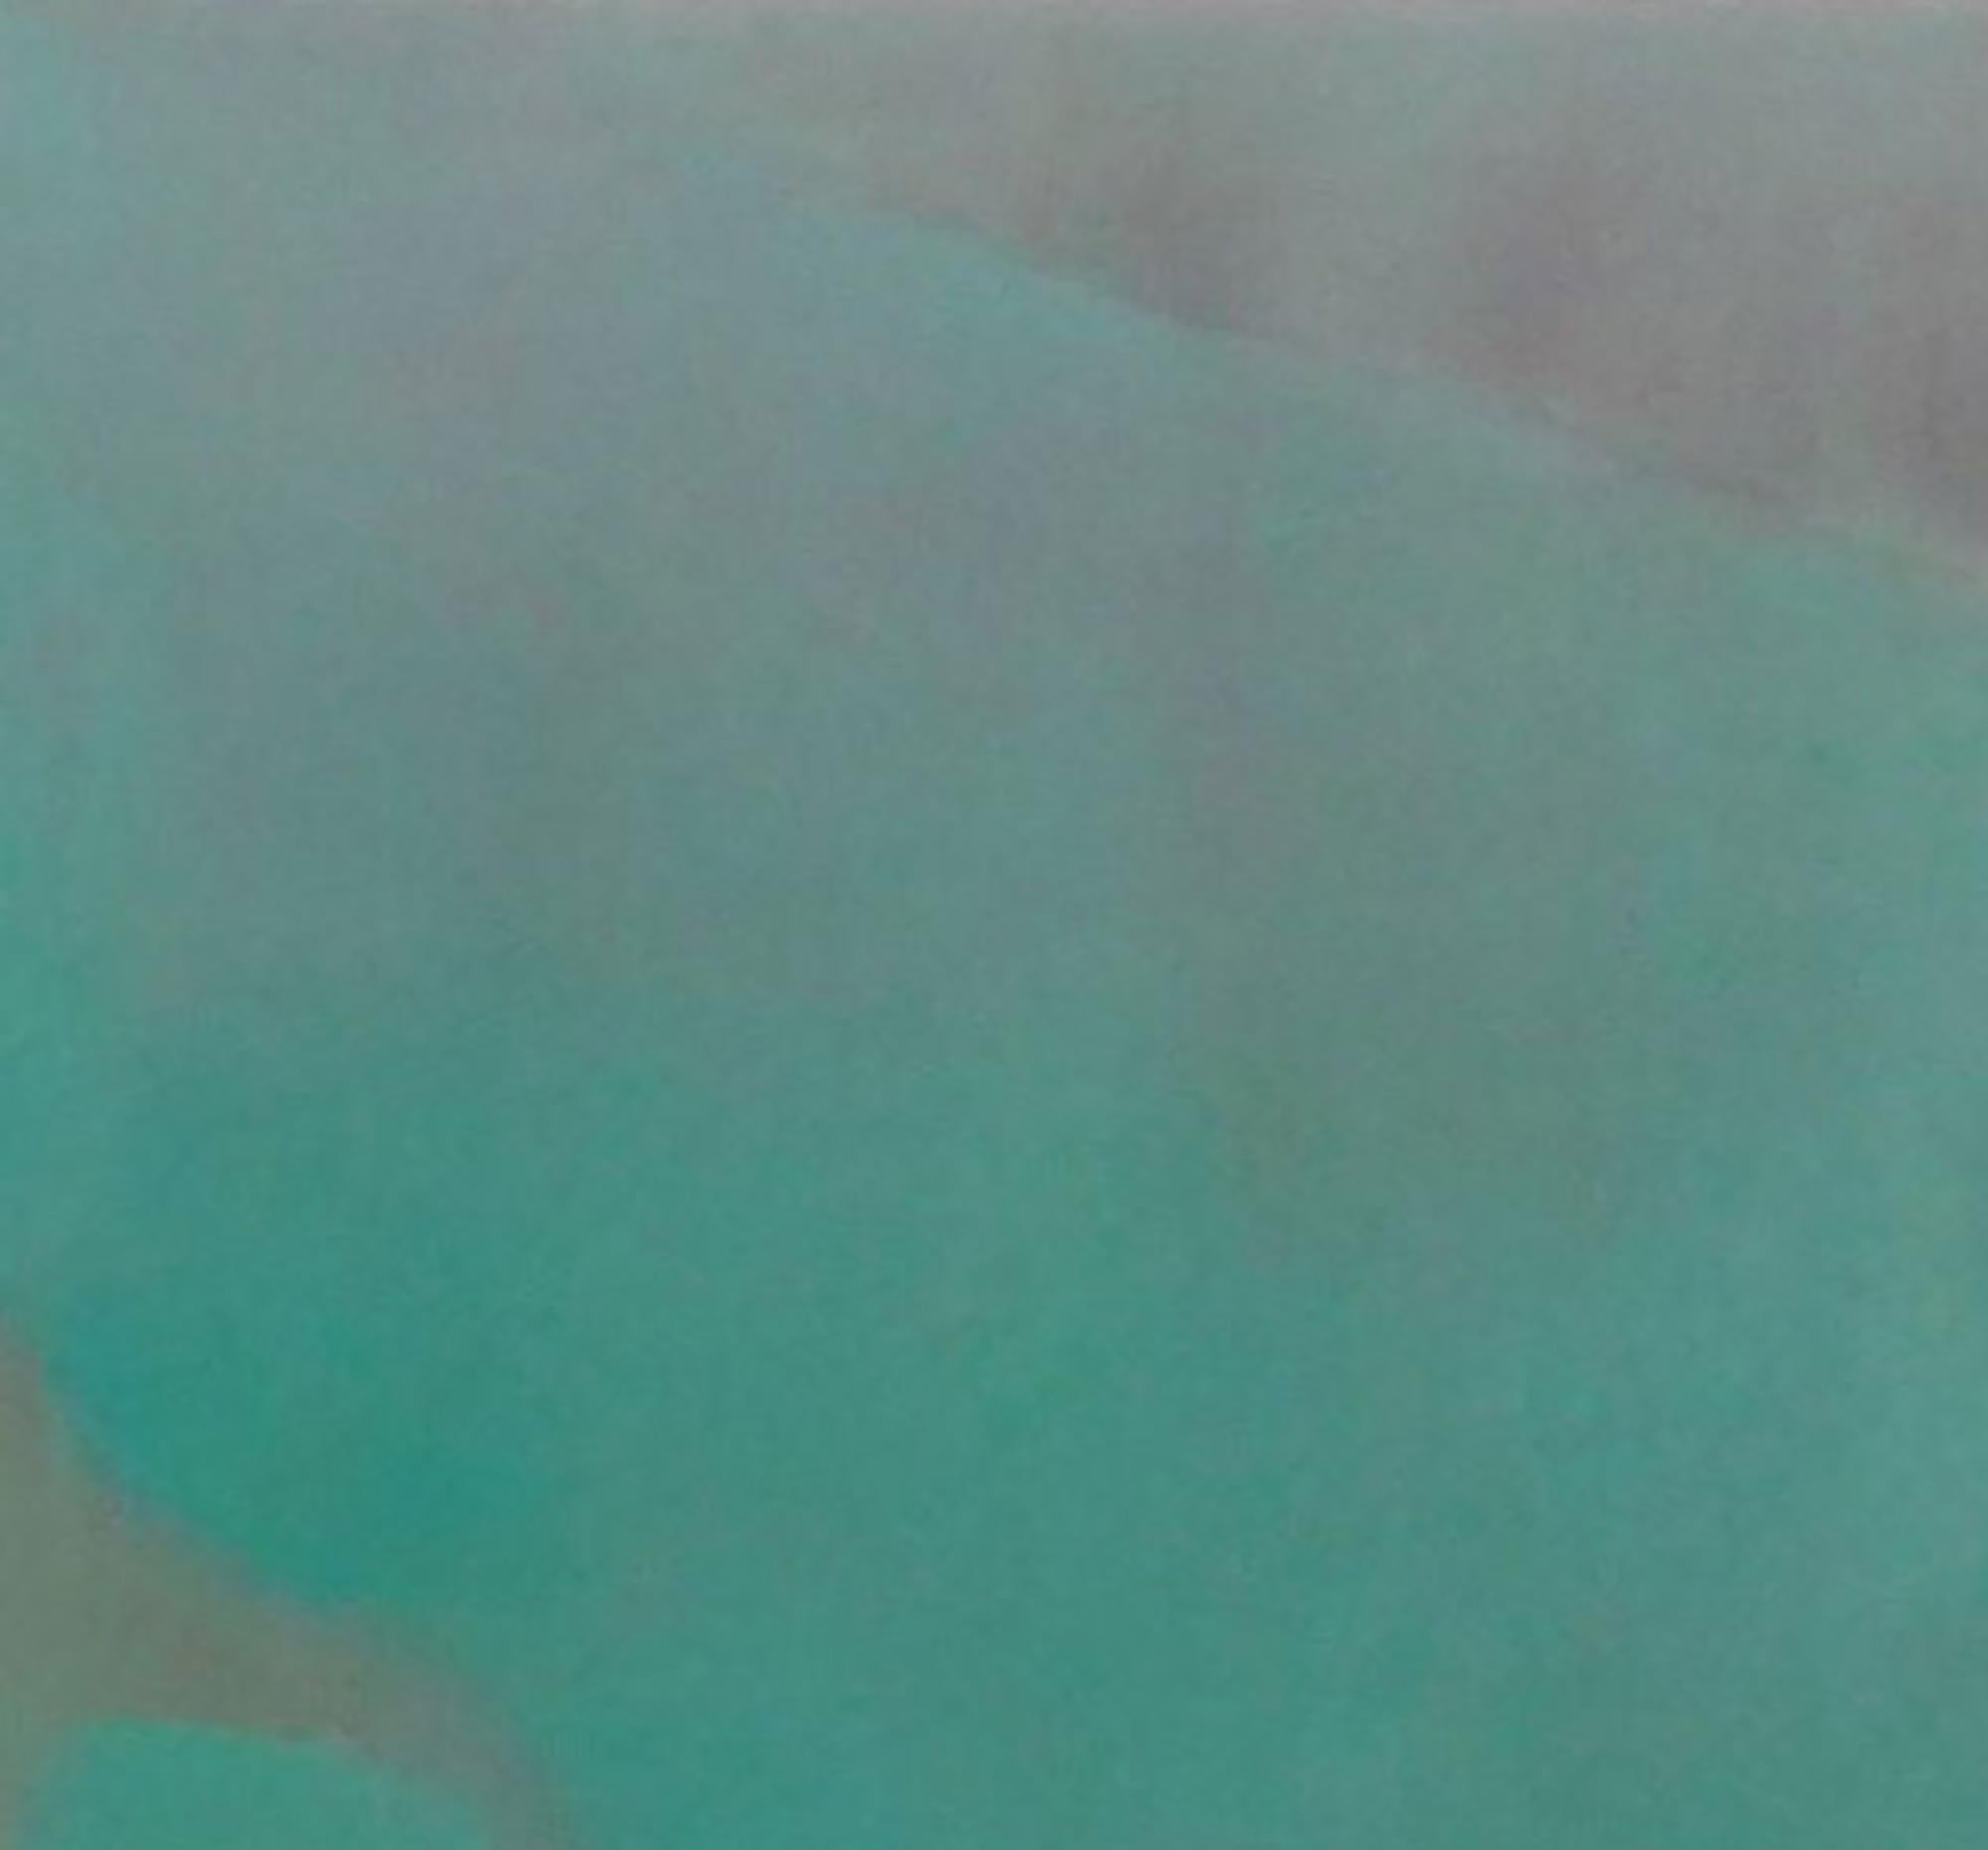 TITLE: Un fiume
ARTIST: Zuzana Pernicová
YEAR: 2016
CLASSIFICATION: Unique
MEDIUM TYPE: Painting
MEDIUM/MATERIALS: Oil on canvas
DIMENSIONS: 170 x 150 cm